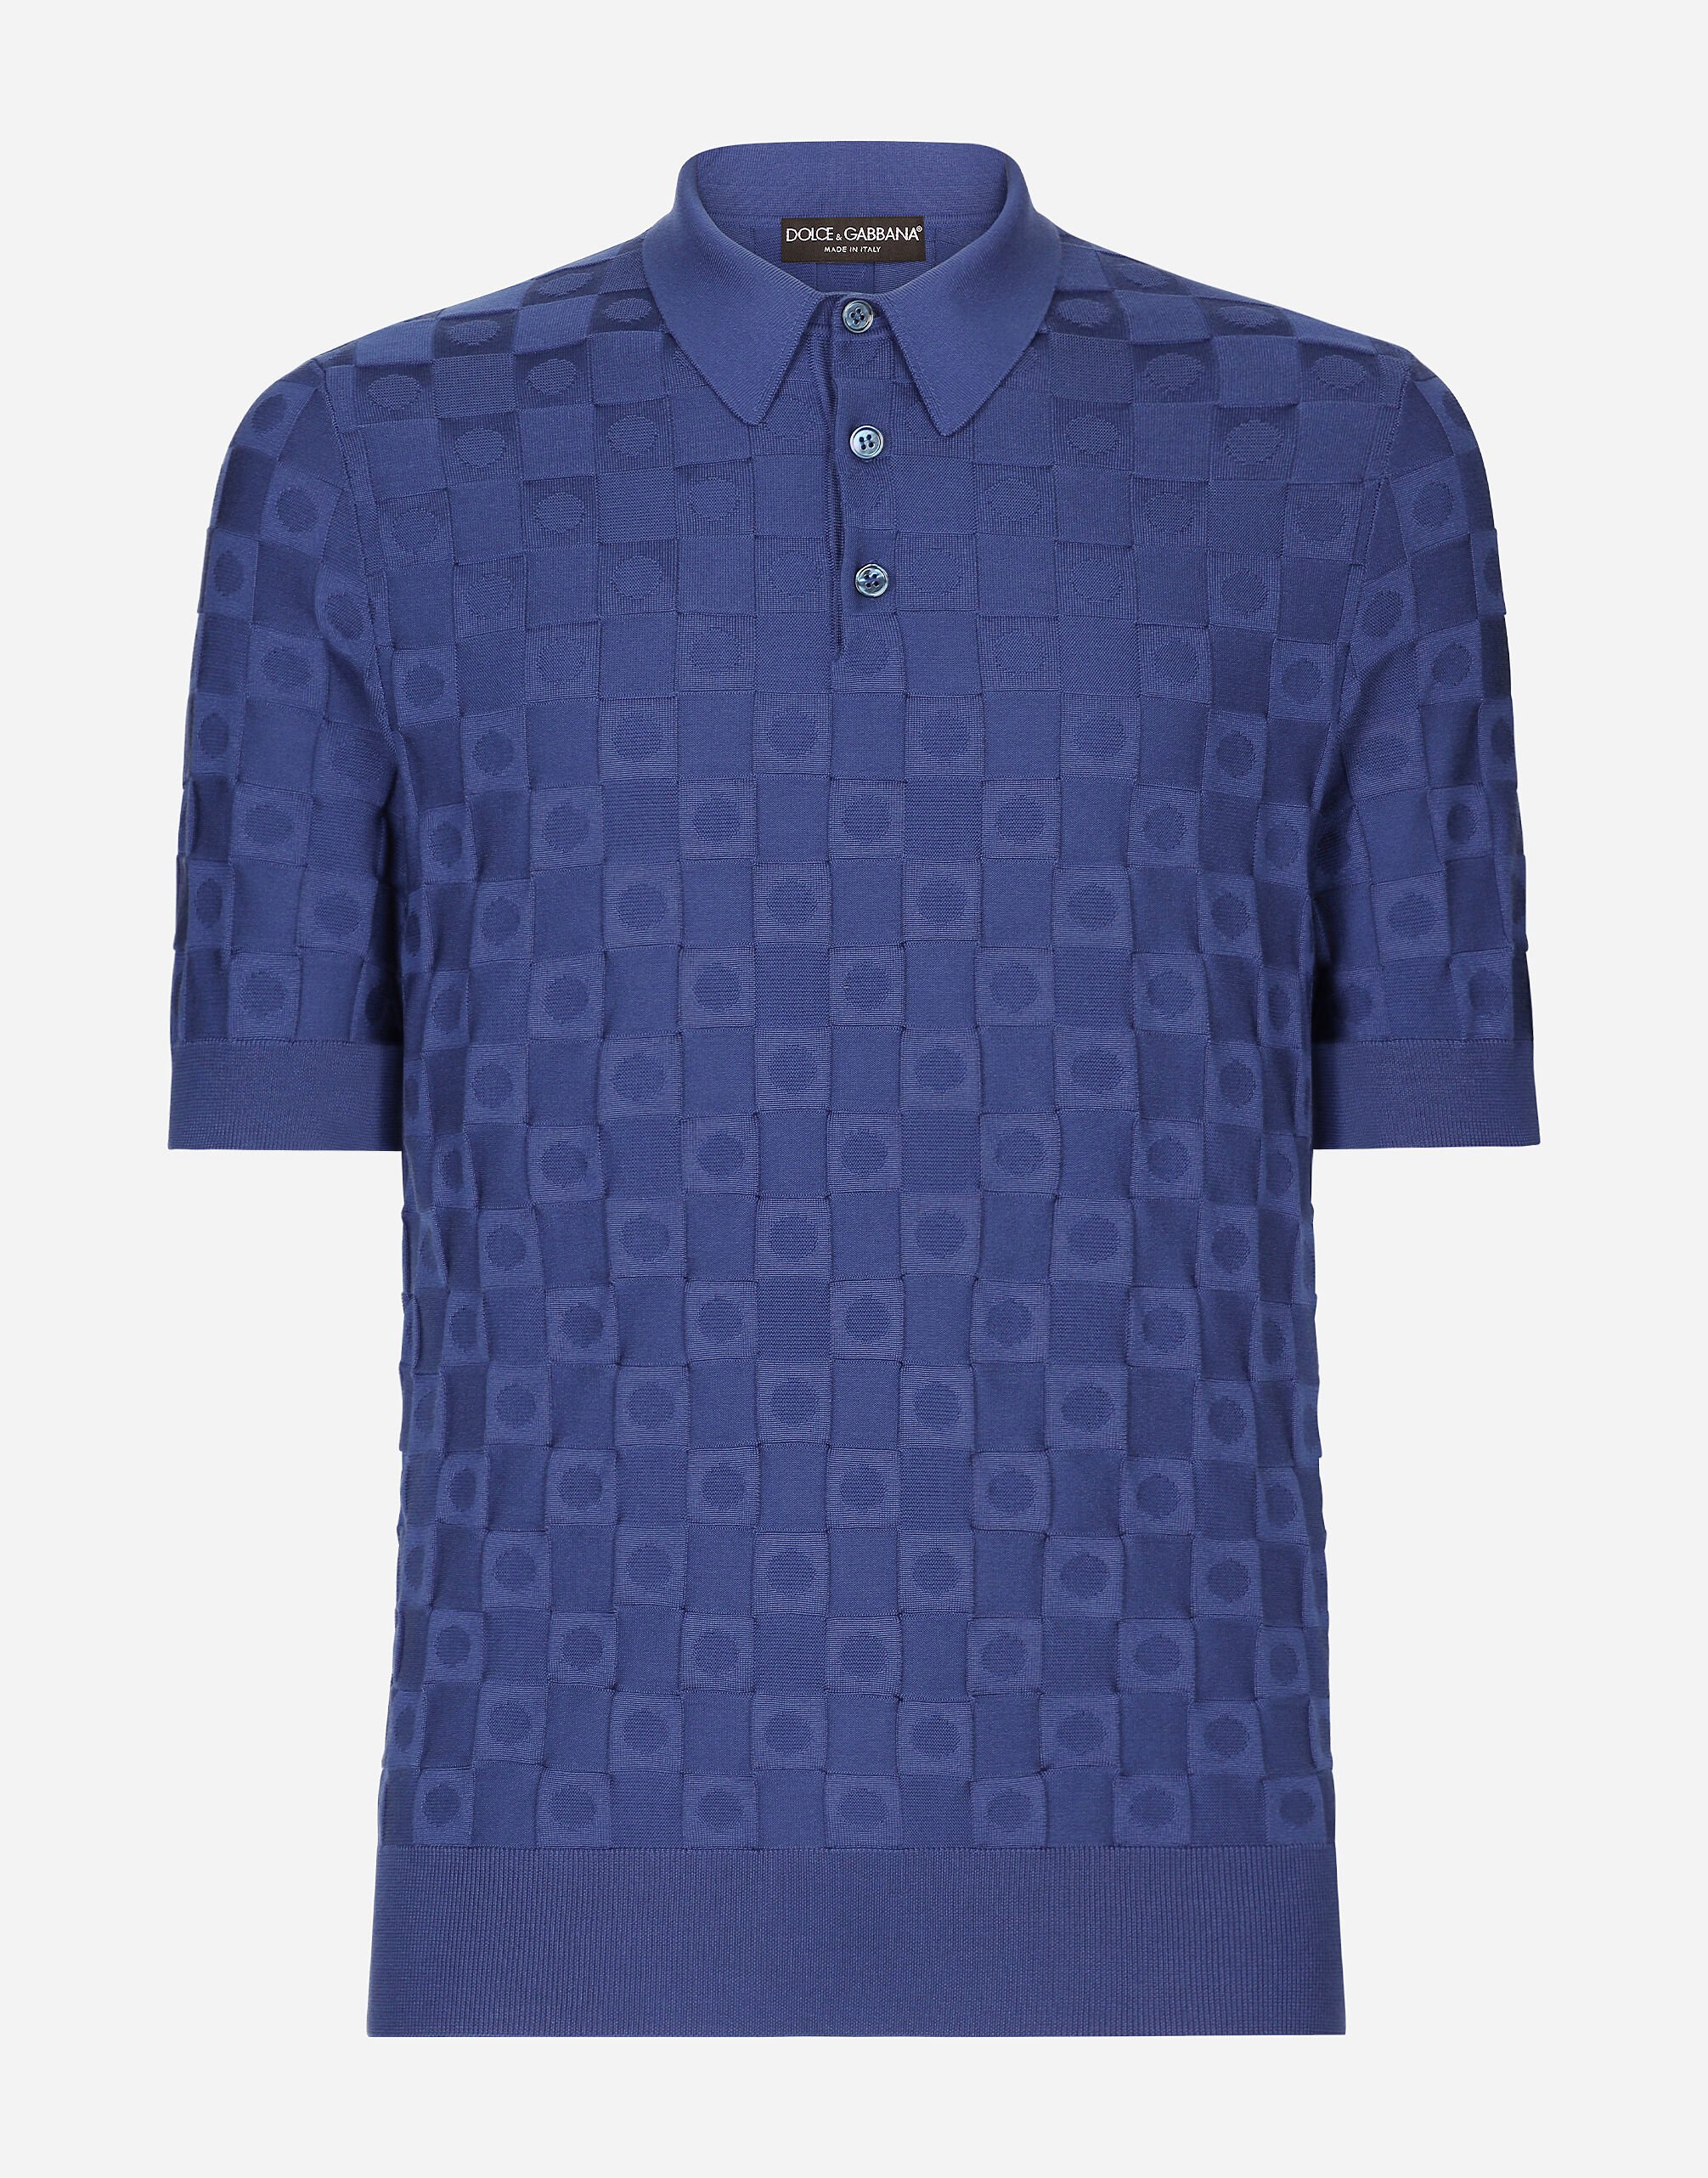 Dolce&Gabbana 3D check silk jacquard polo-shirt Blue GW3JATFUFJR